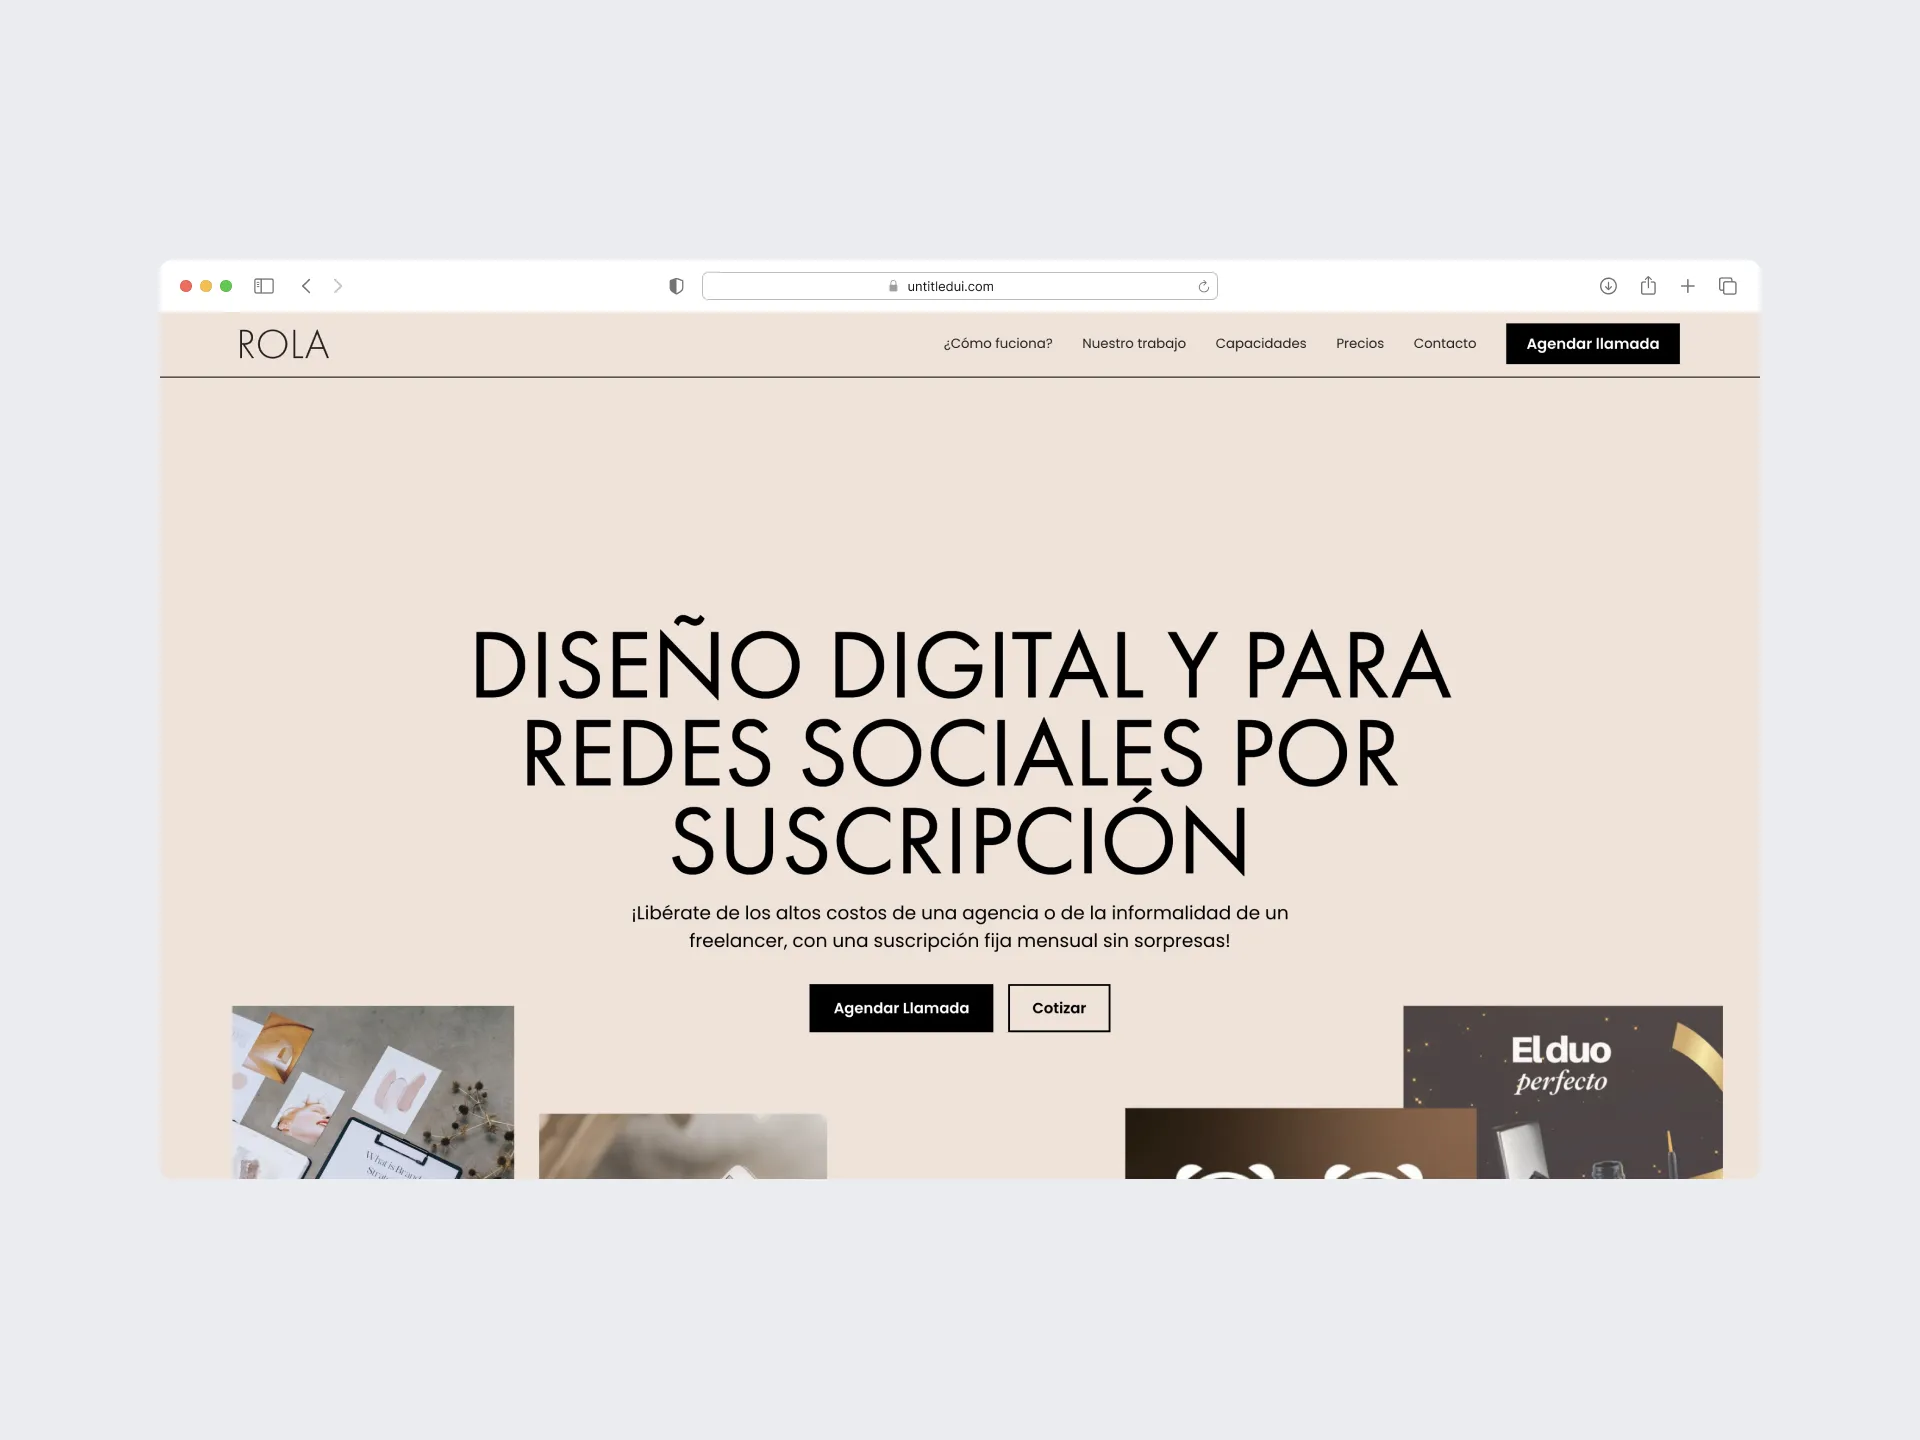 Rola Design. Graphic, Social Media, and Web design subscription services